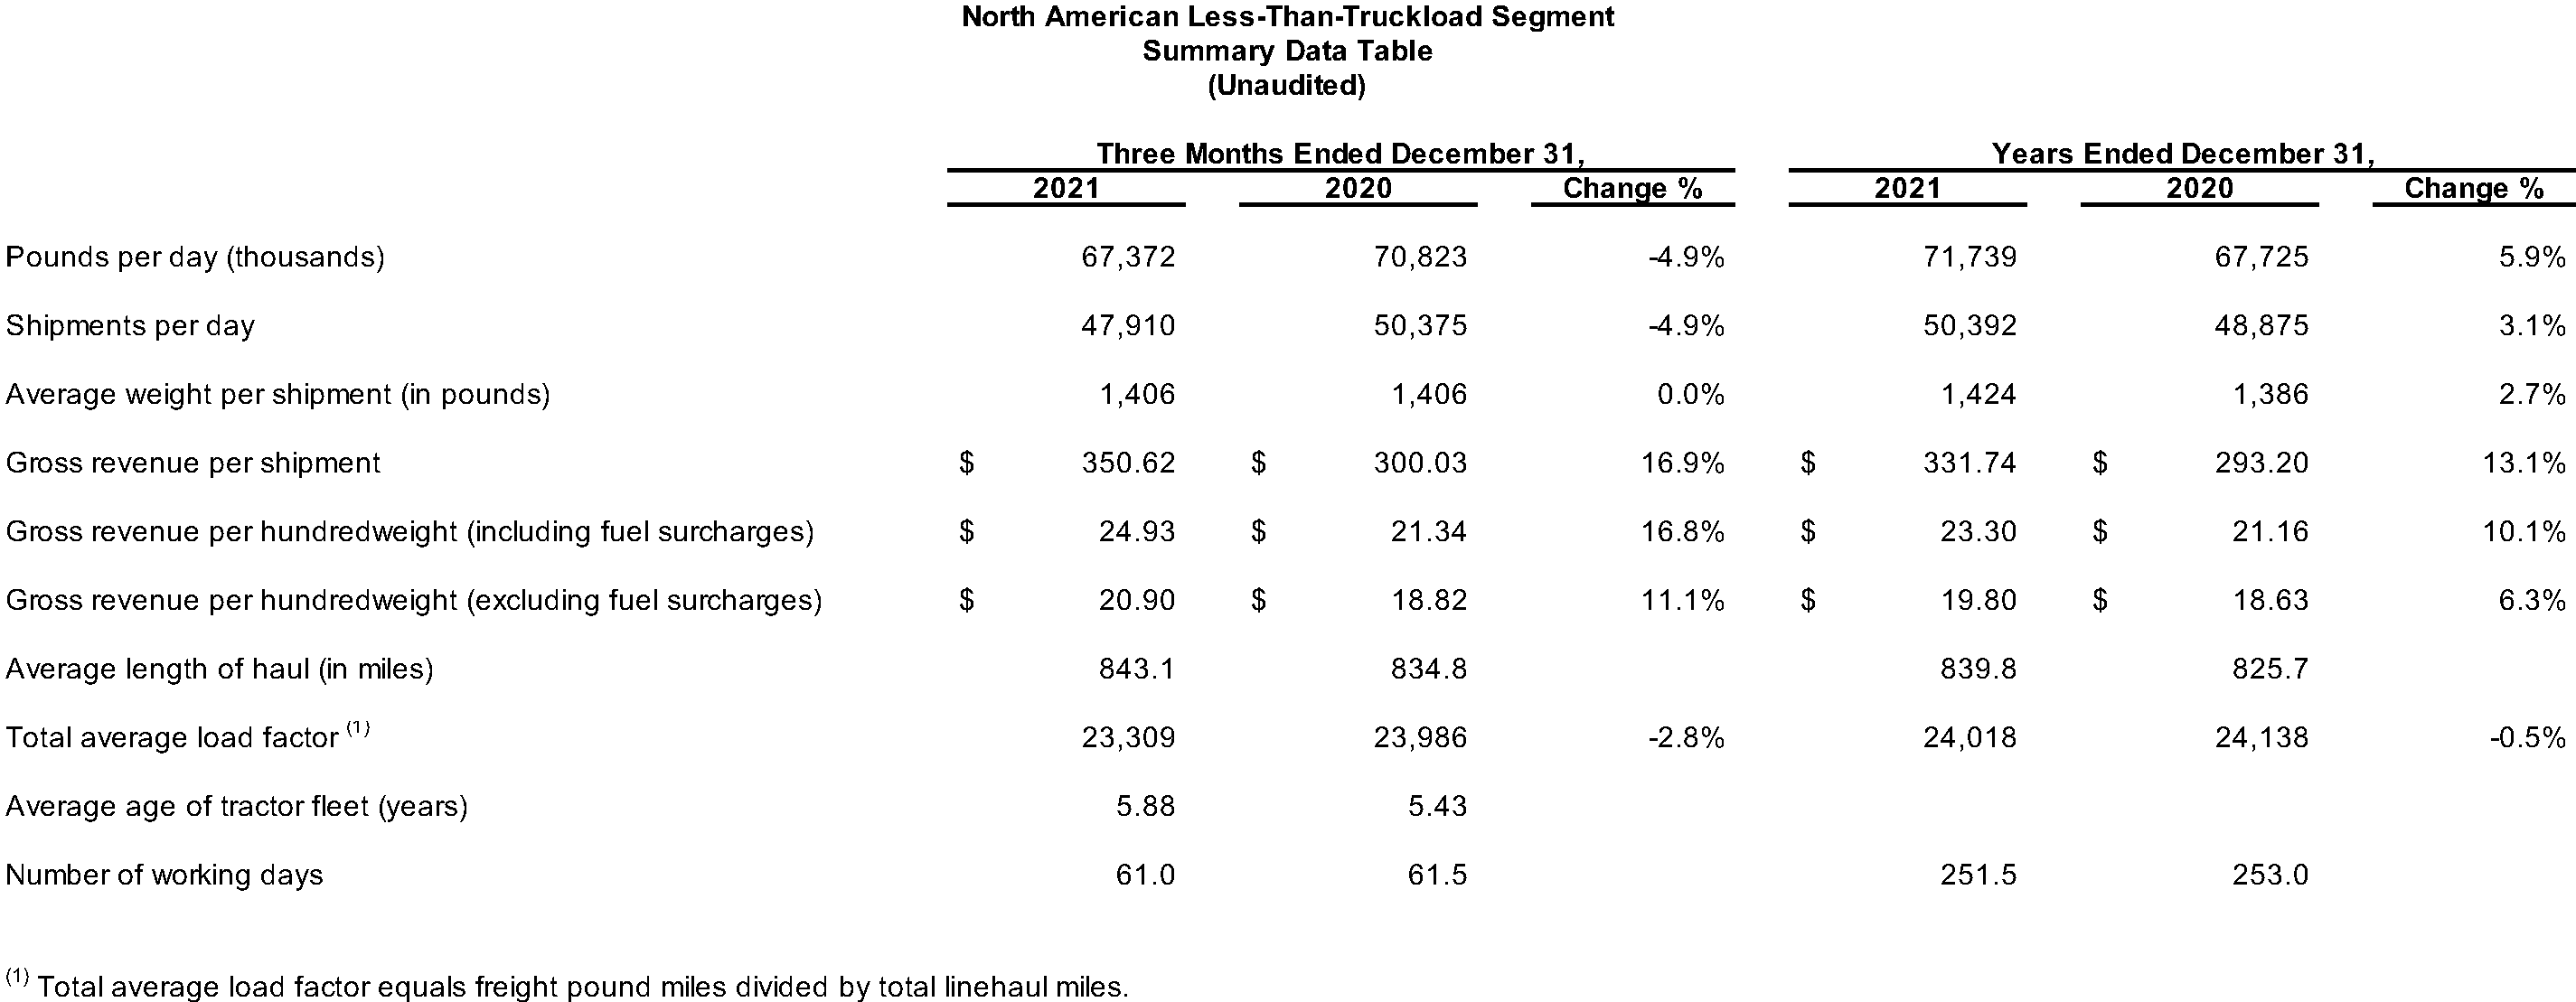 North American Less-Than-Truckload Segment Summary Data Table